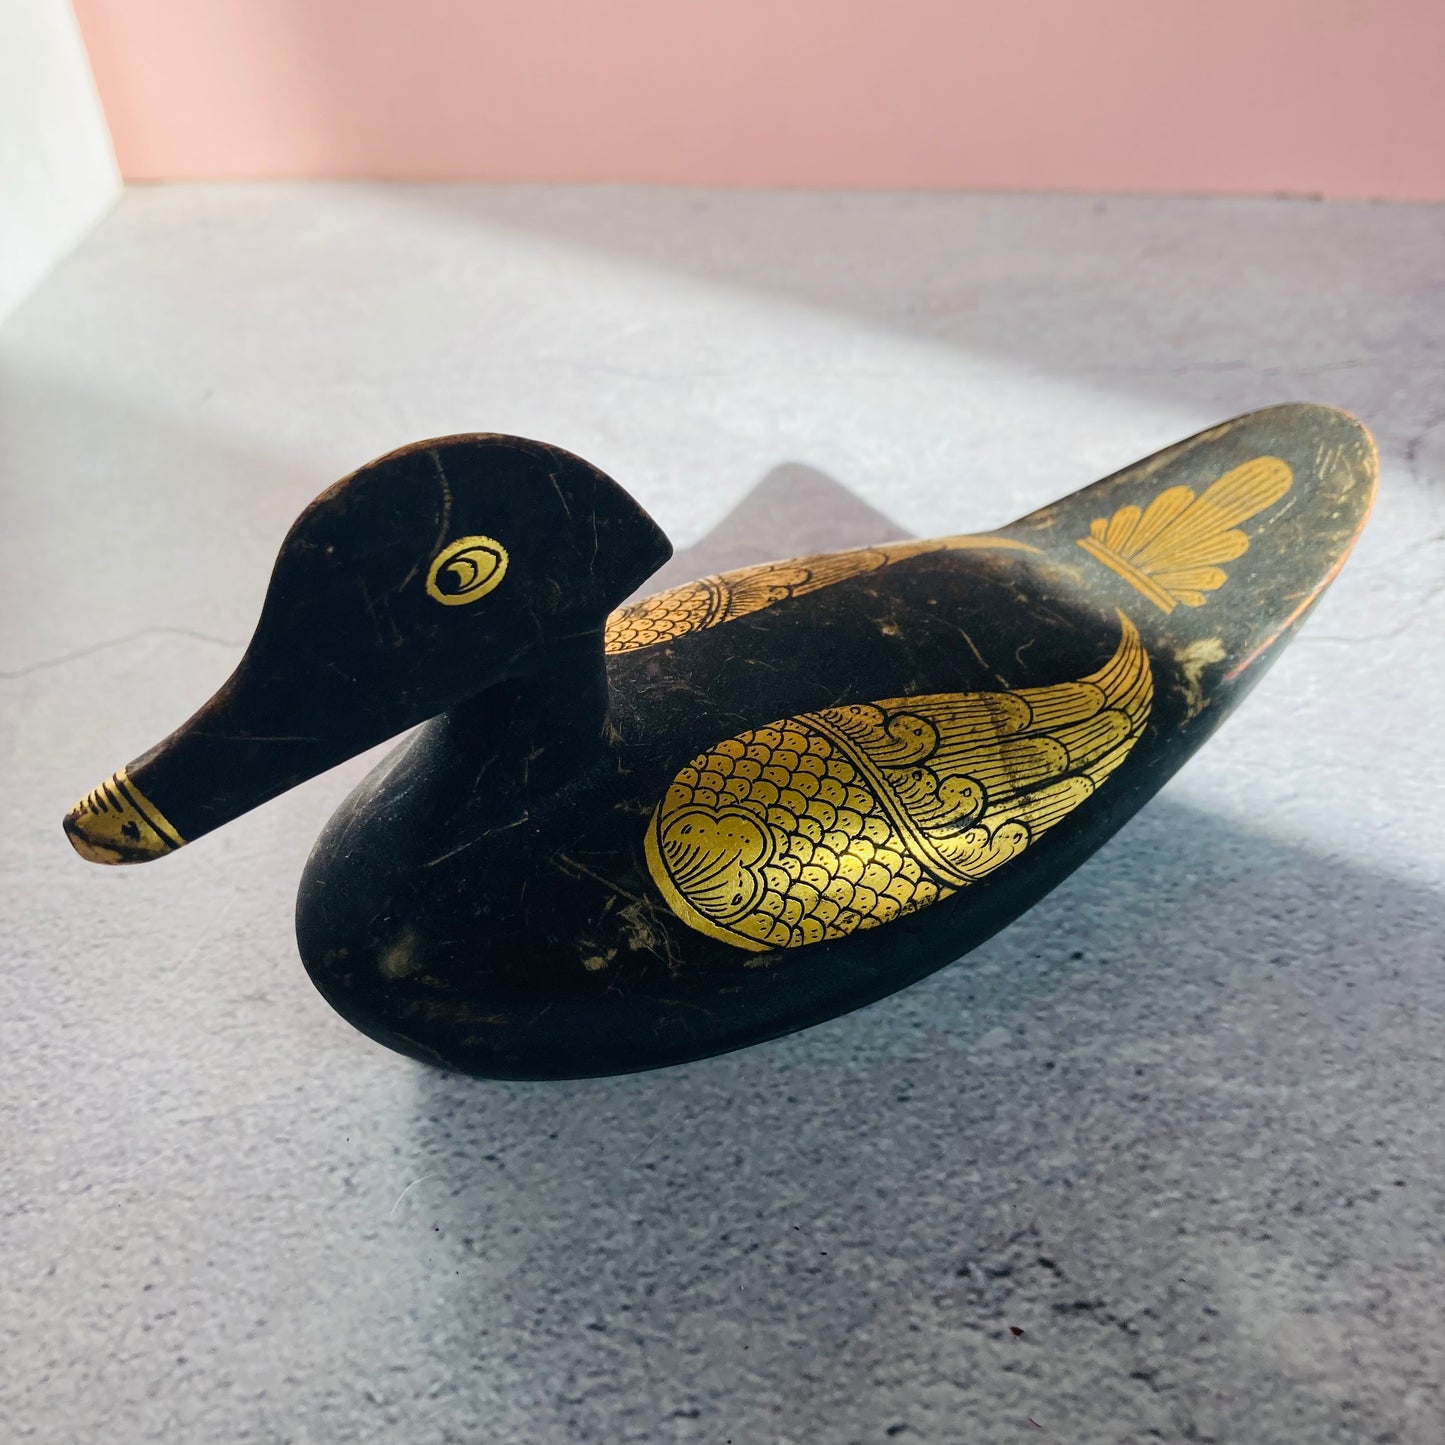 The Director Winnie - Antique Black Lacquer Duck Figure